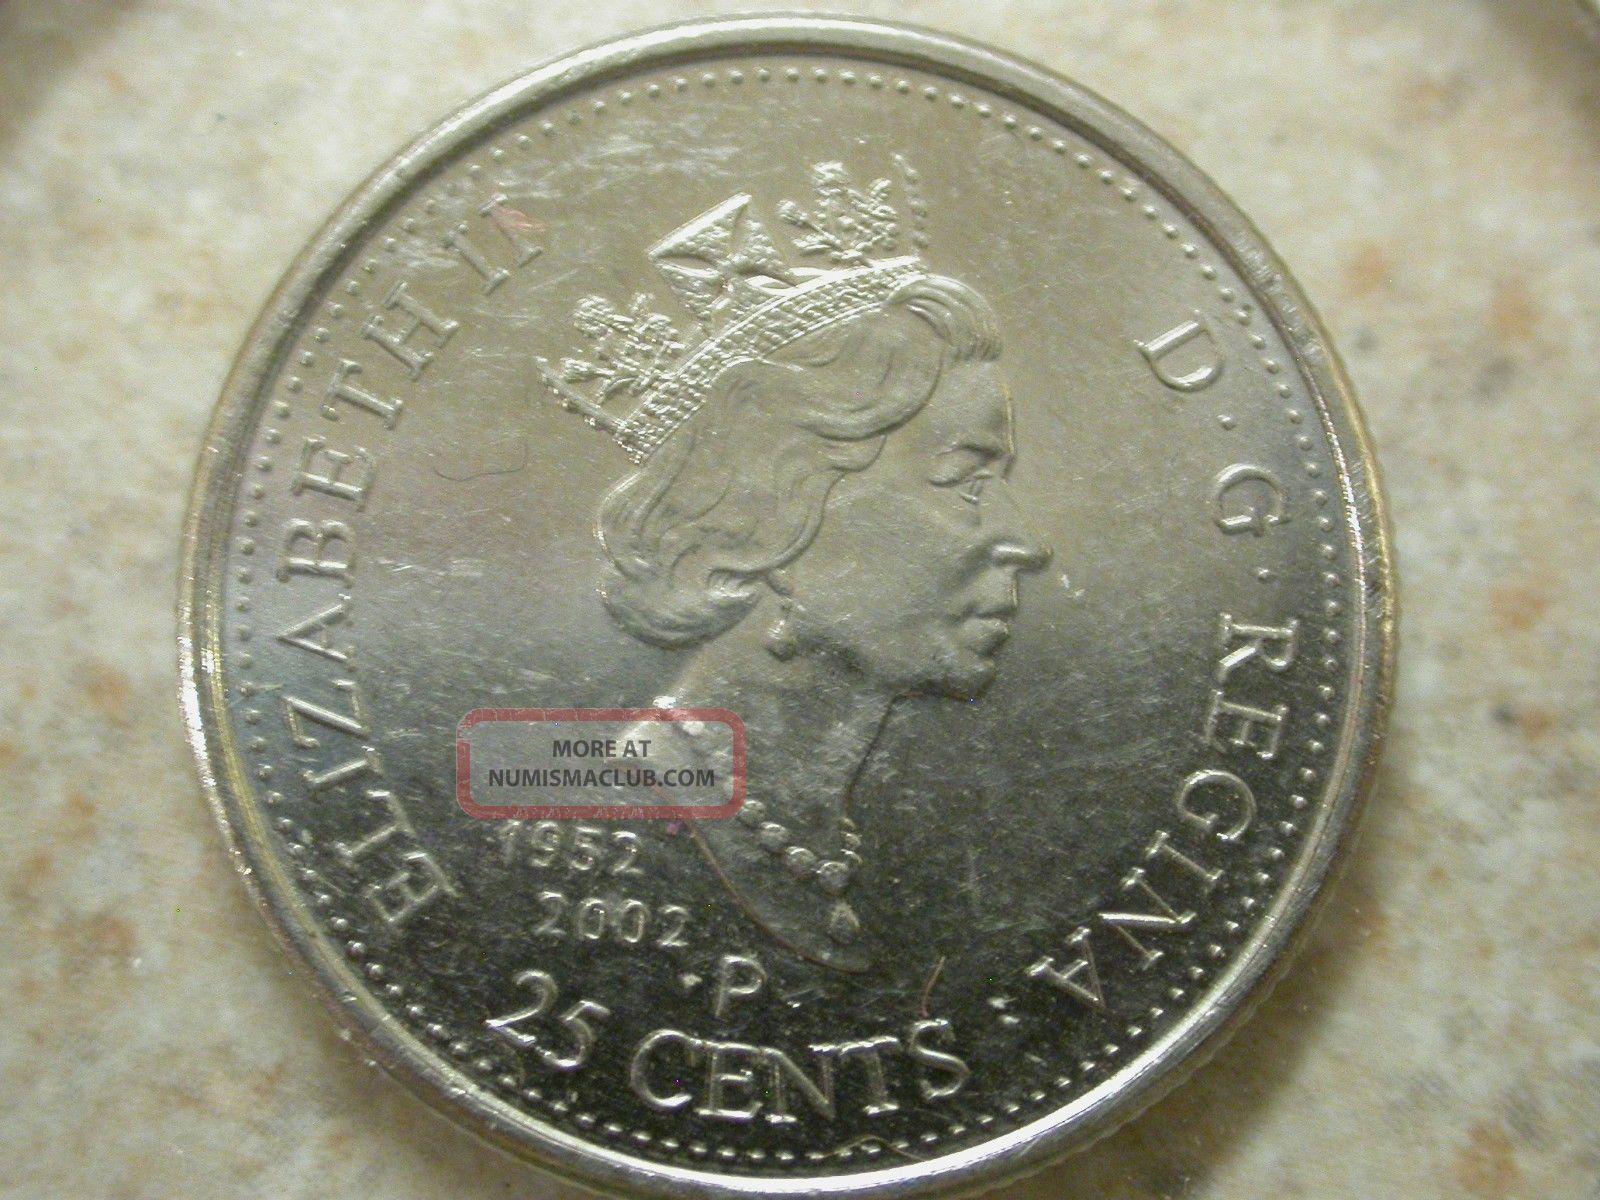 2002 canadian quarter